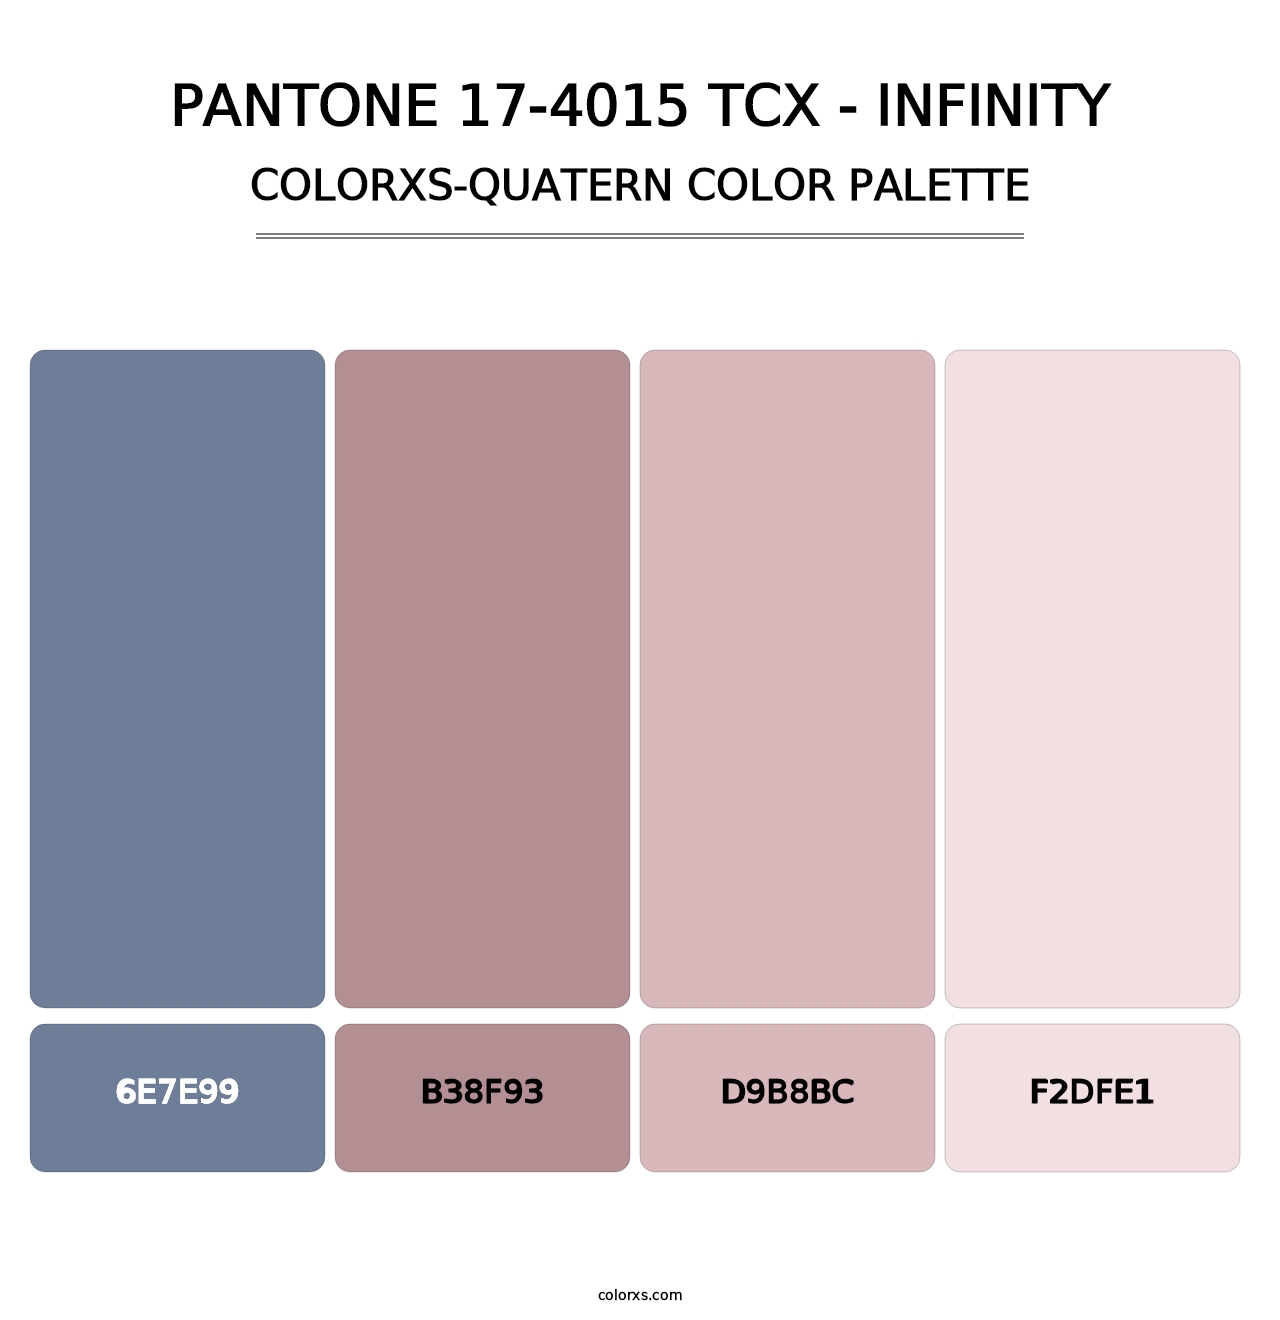 PANTONE 17-4015 TCX - Infinity - Colorxs Quatern Palette